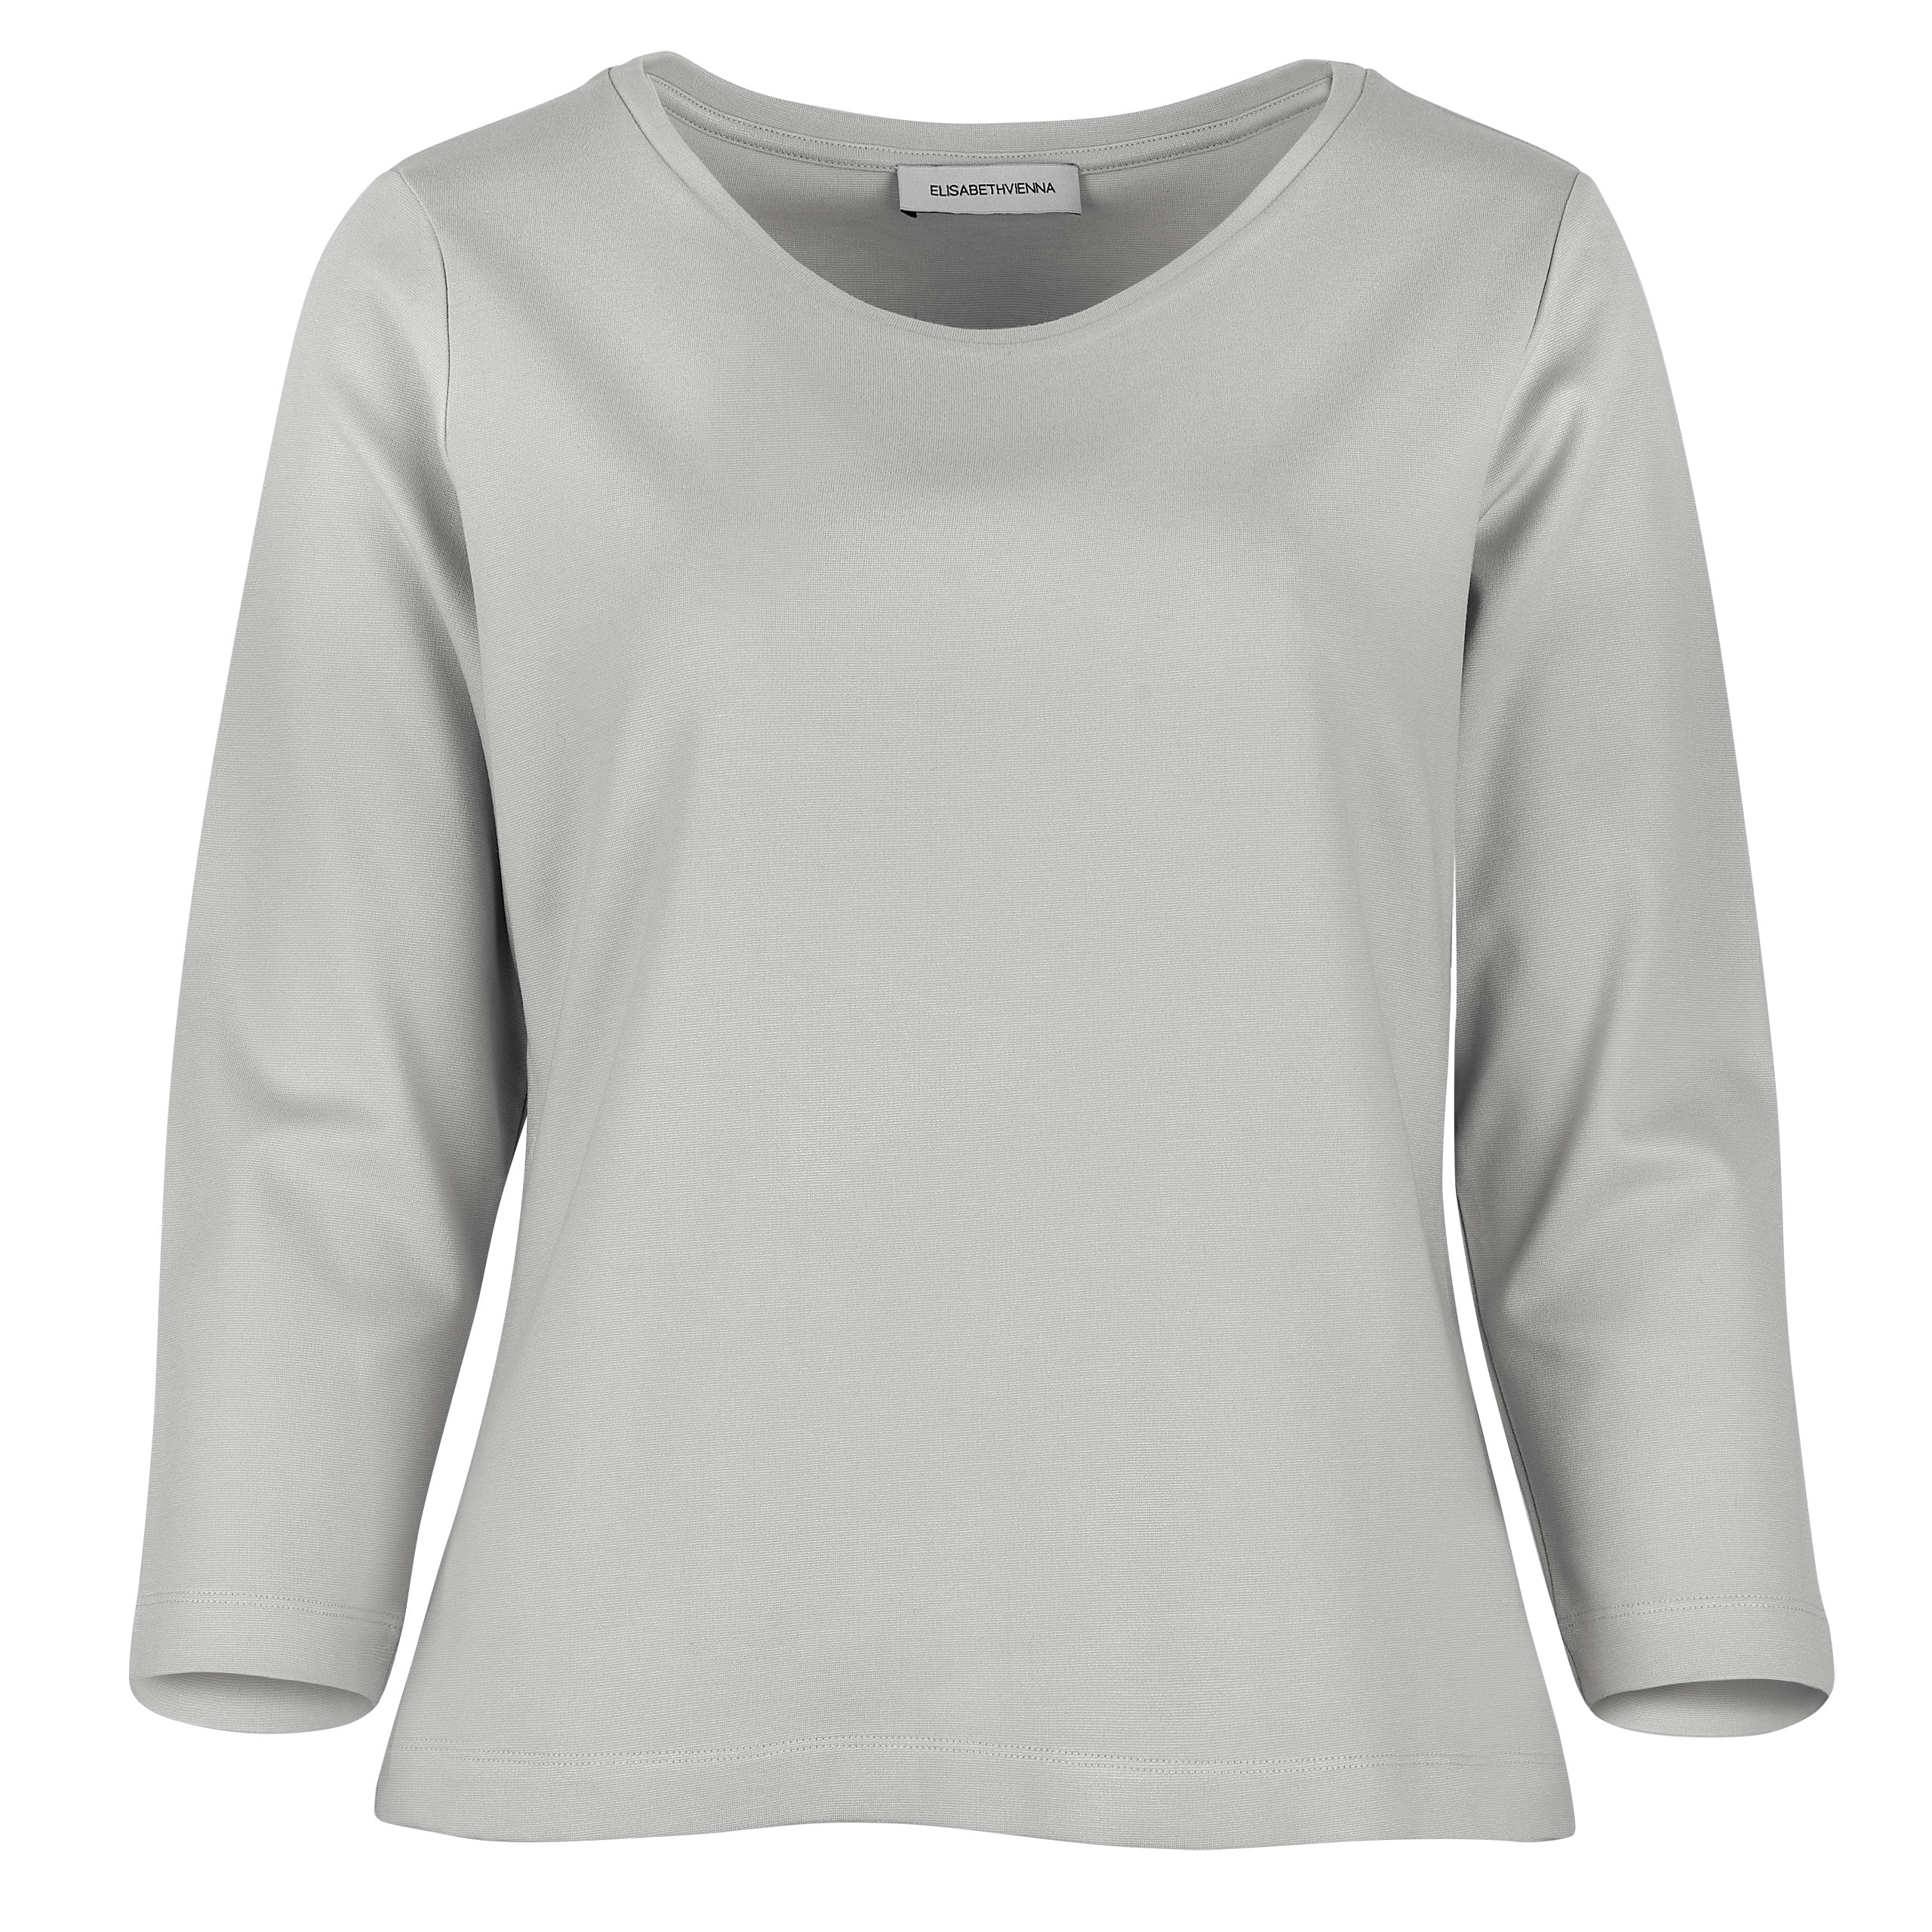 Shirt Code 58 warm gray